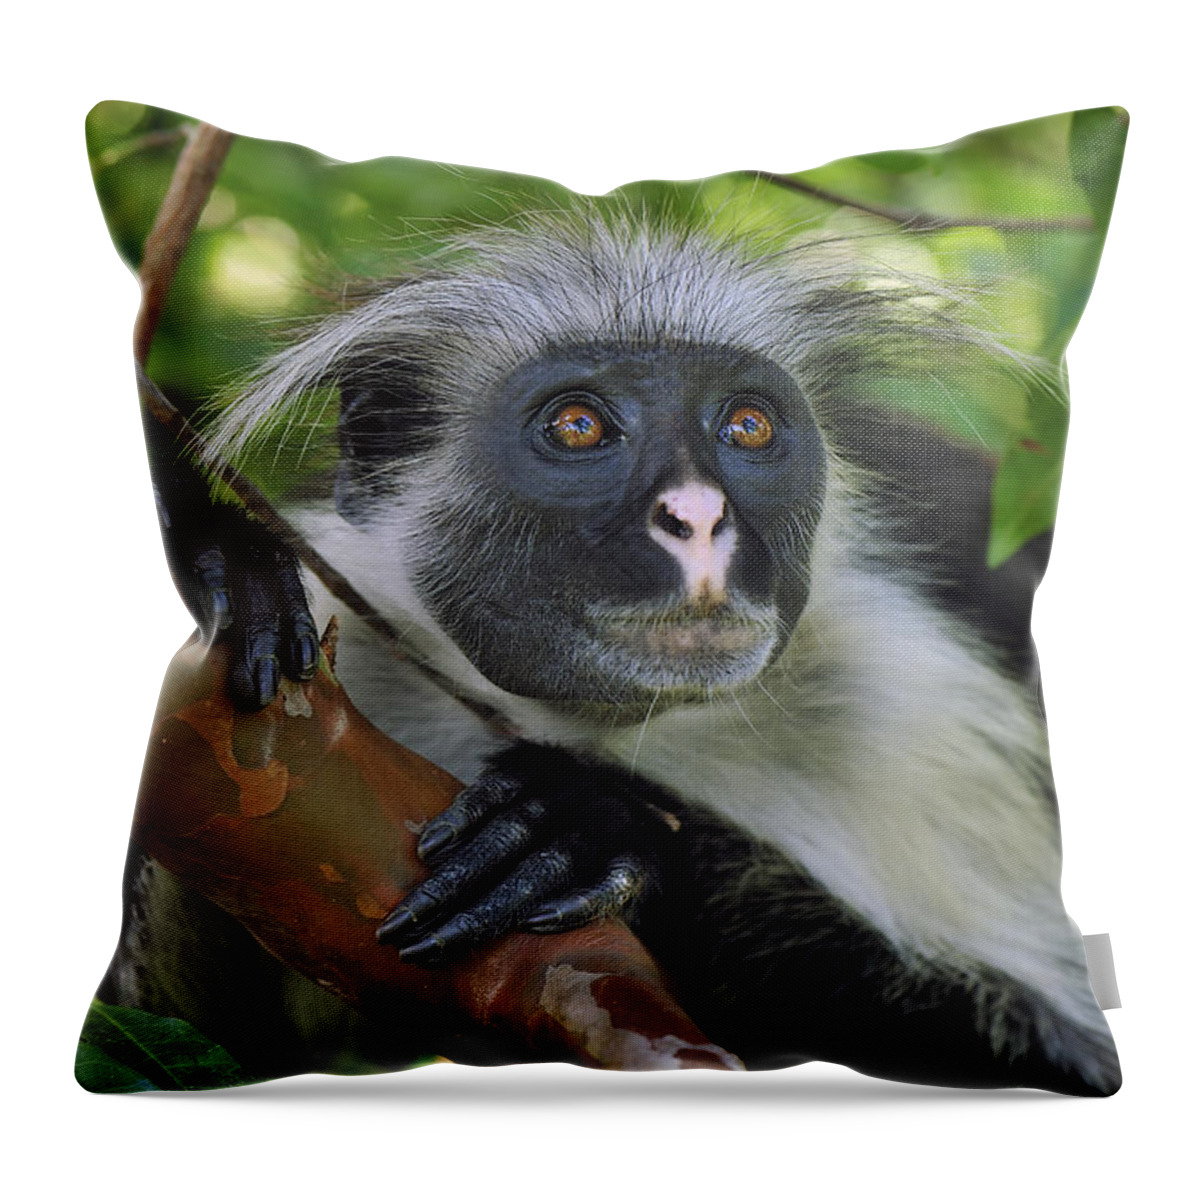 Thomas Marent Throw Pillow featuring the photograph Zanzibar Red Colobus Monkey by Thomas Marent